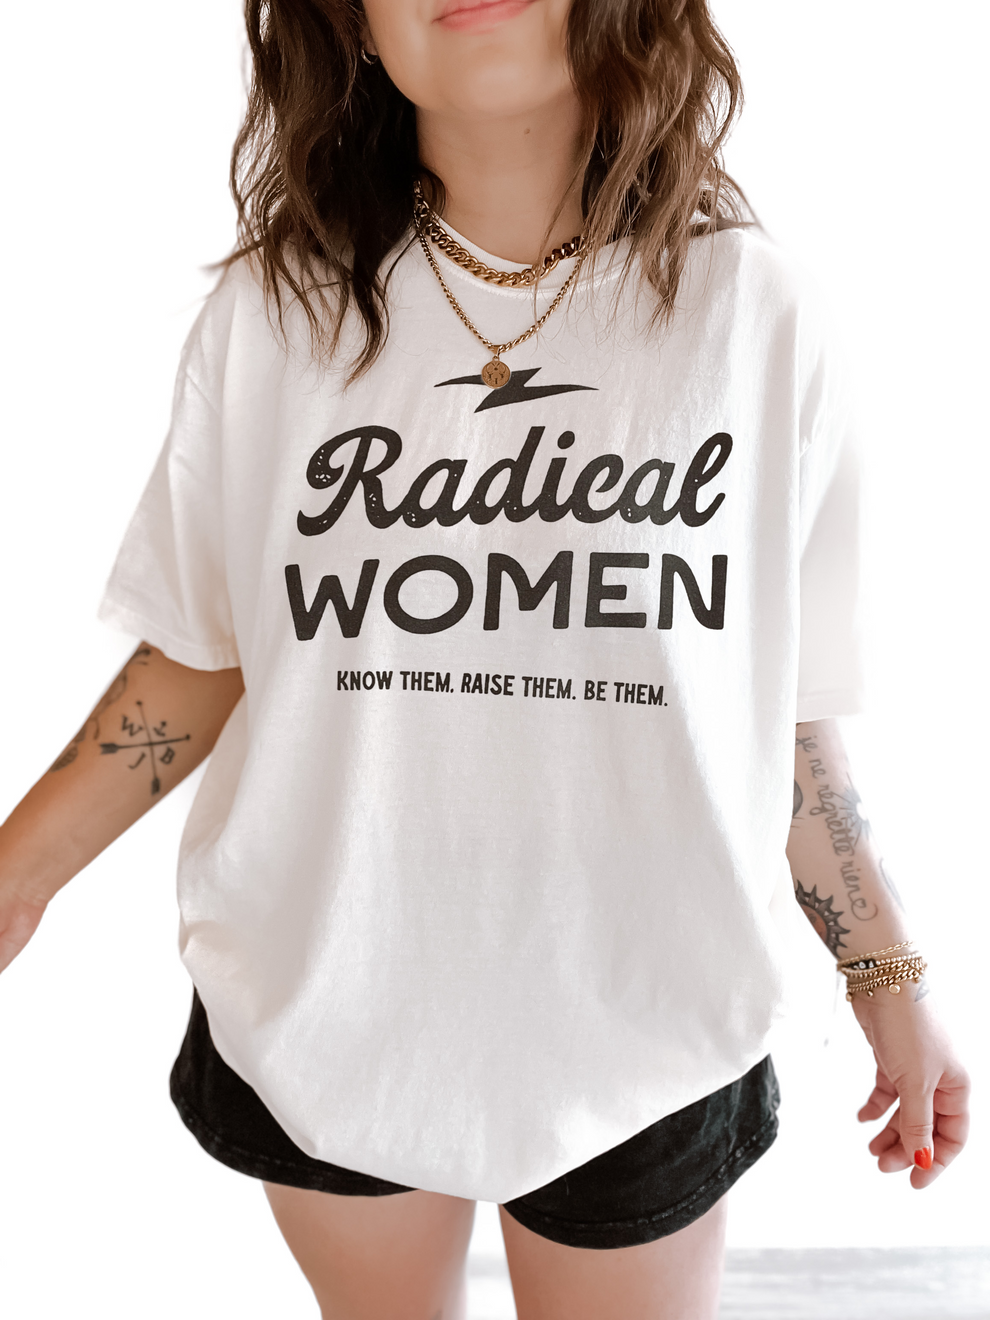 Radical Women Tee - Ivory